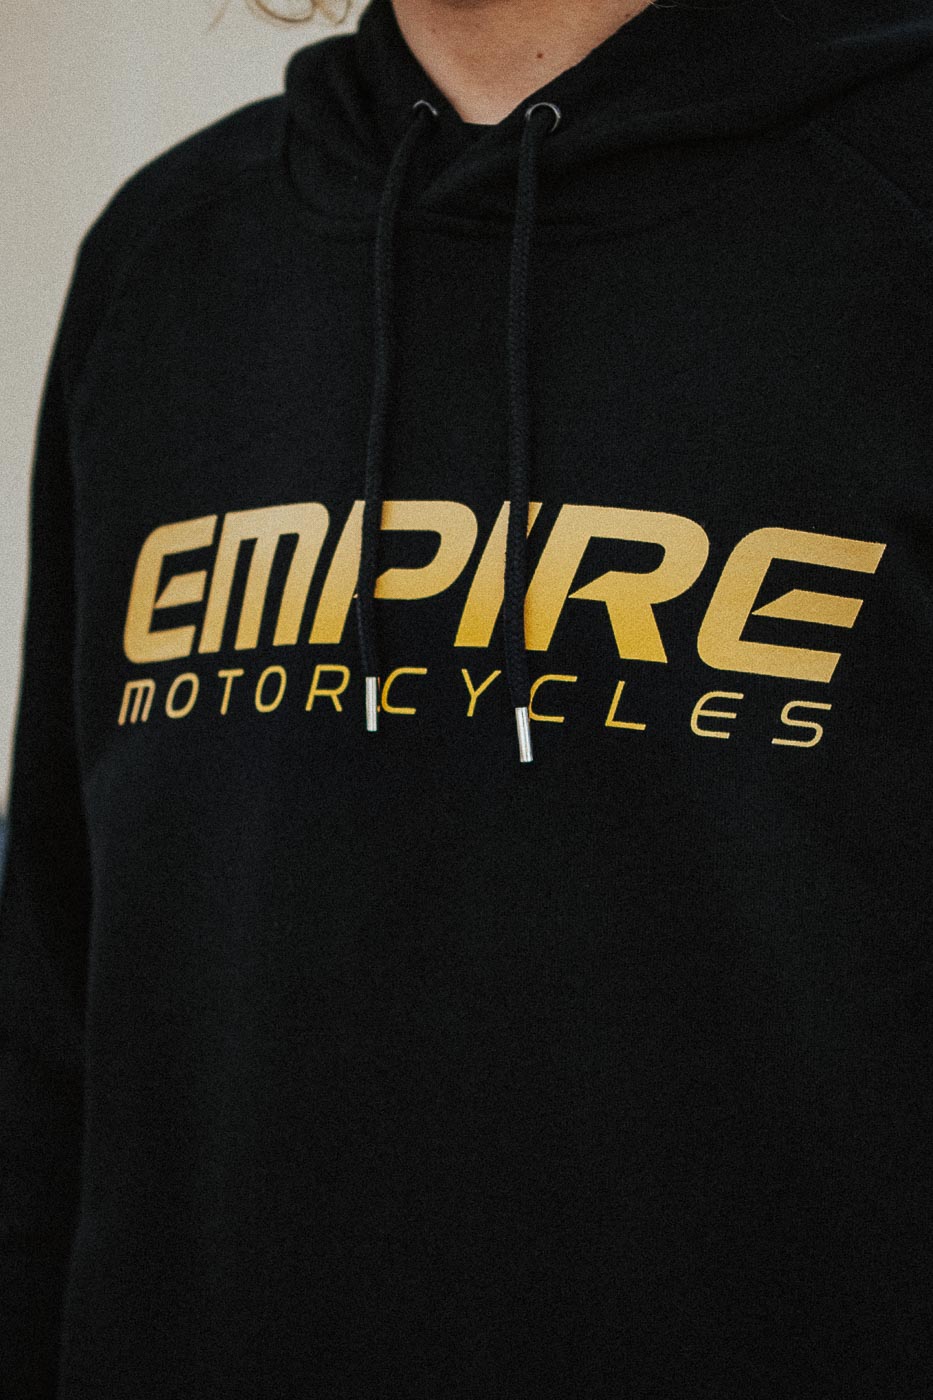 Empire Motorcycles Gold Hoodie - Black